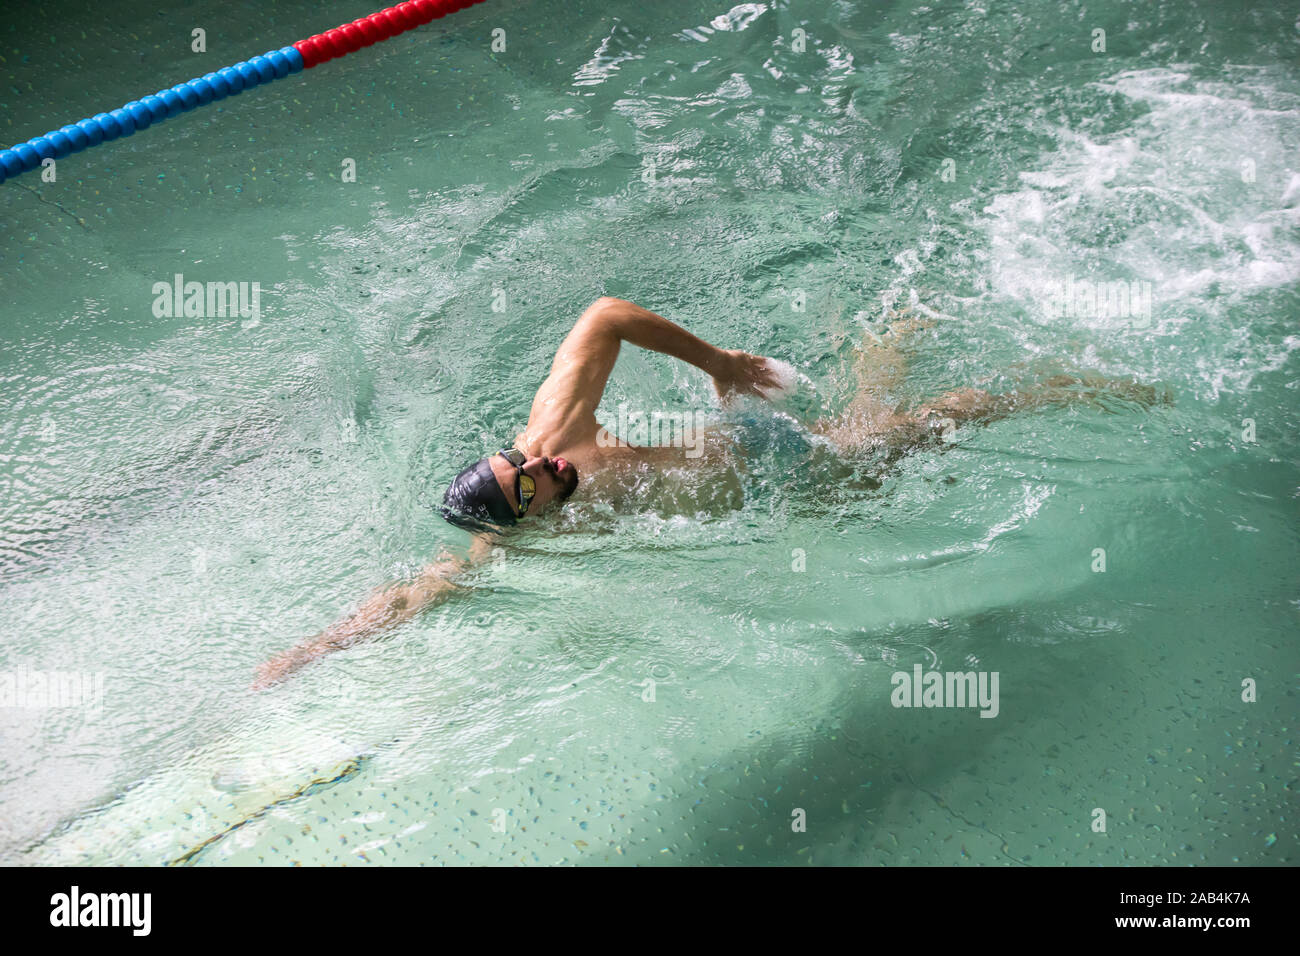 Man swimming on indoor pool. Stock Photo